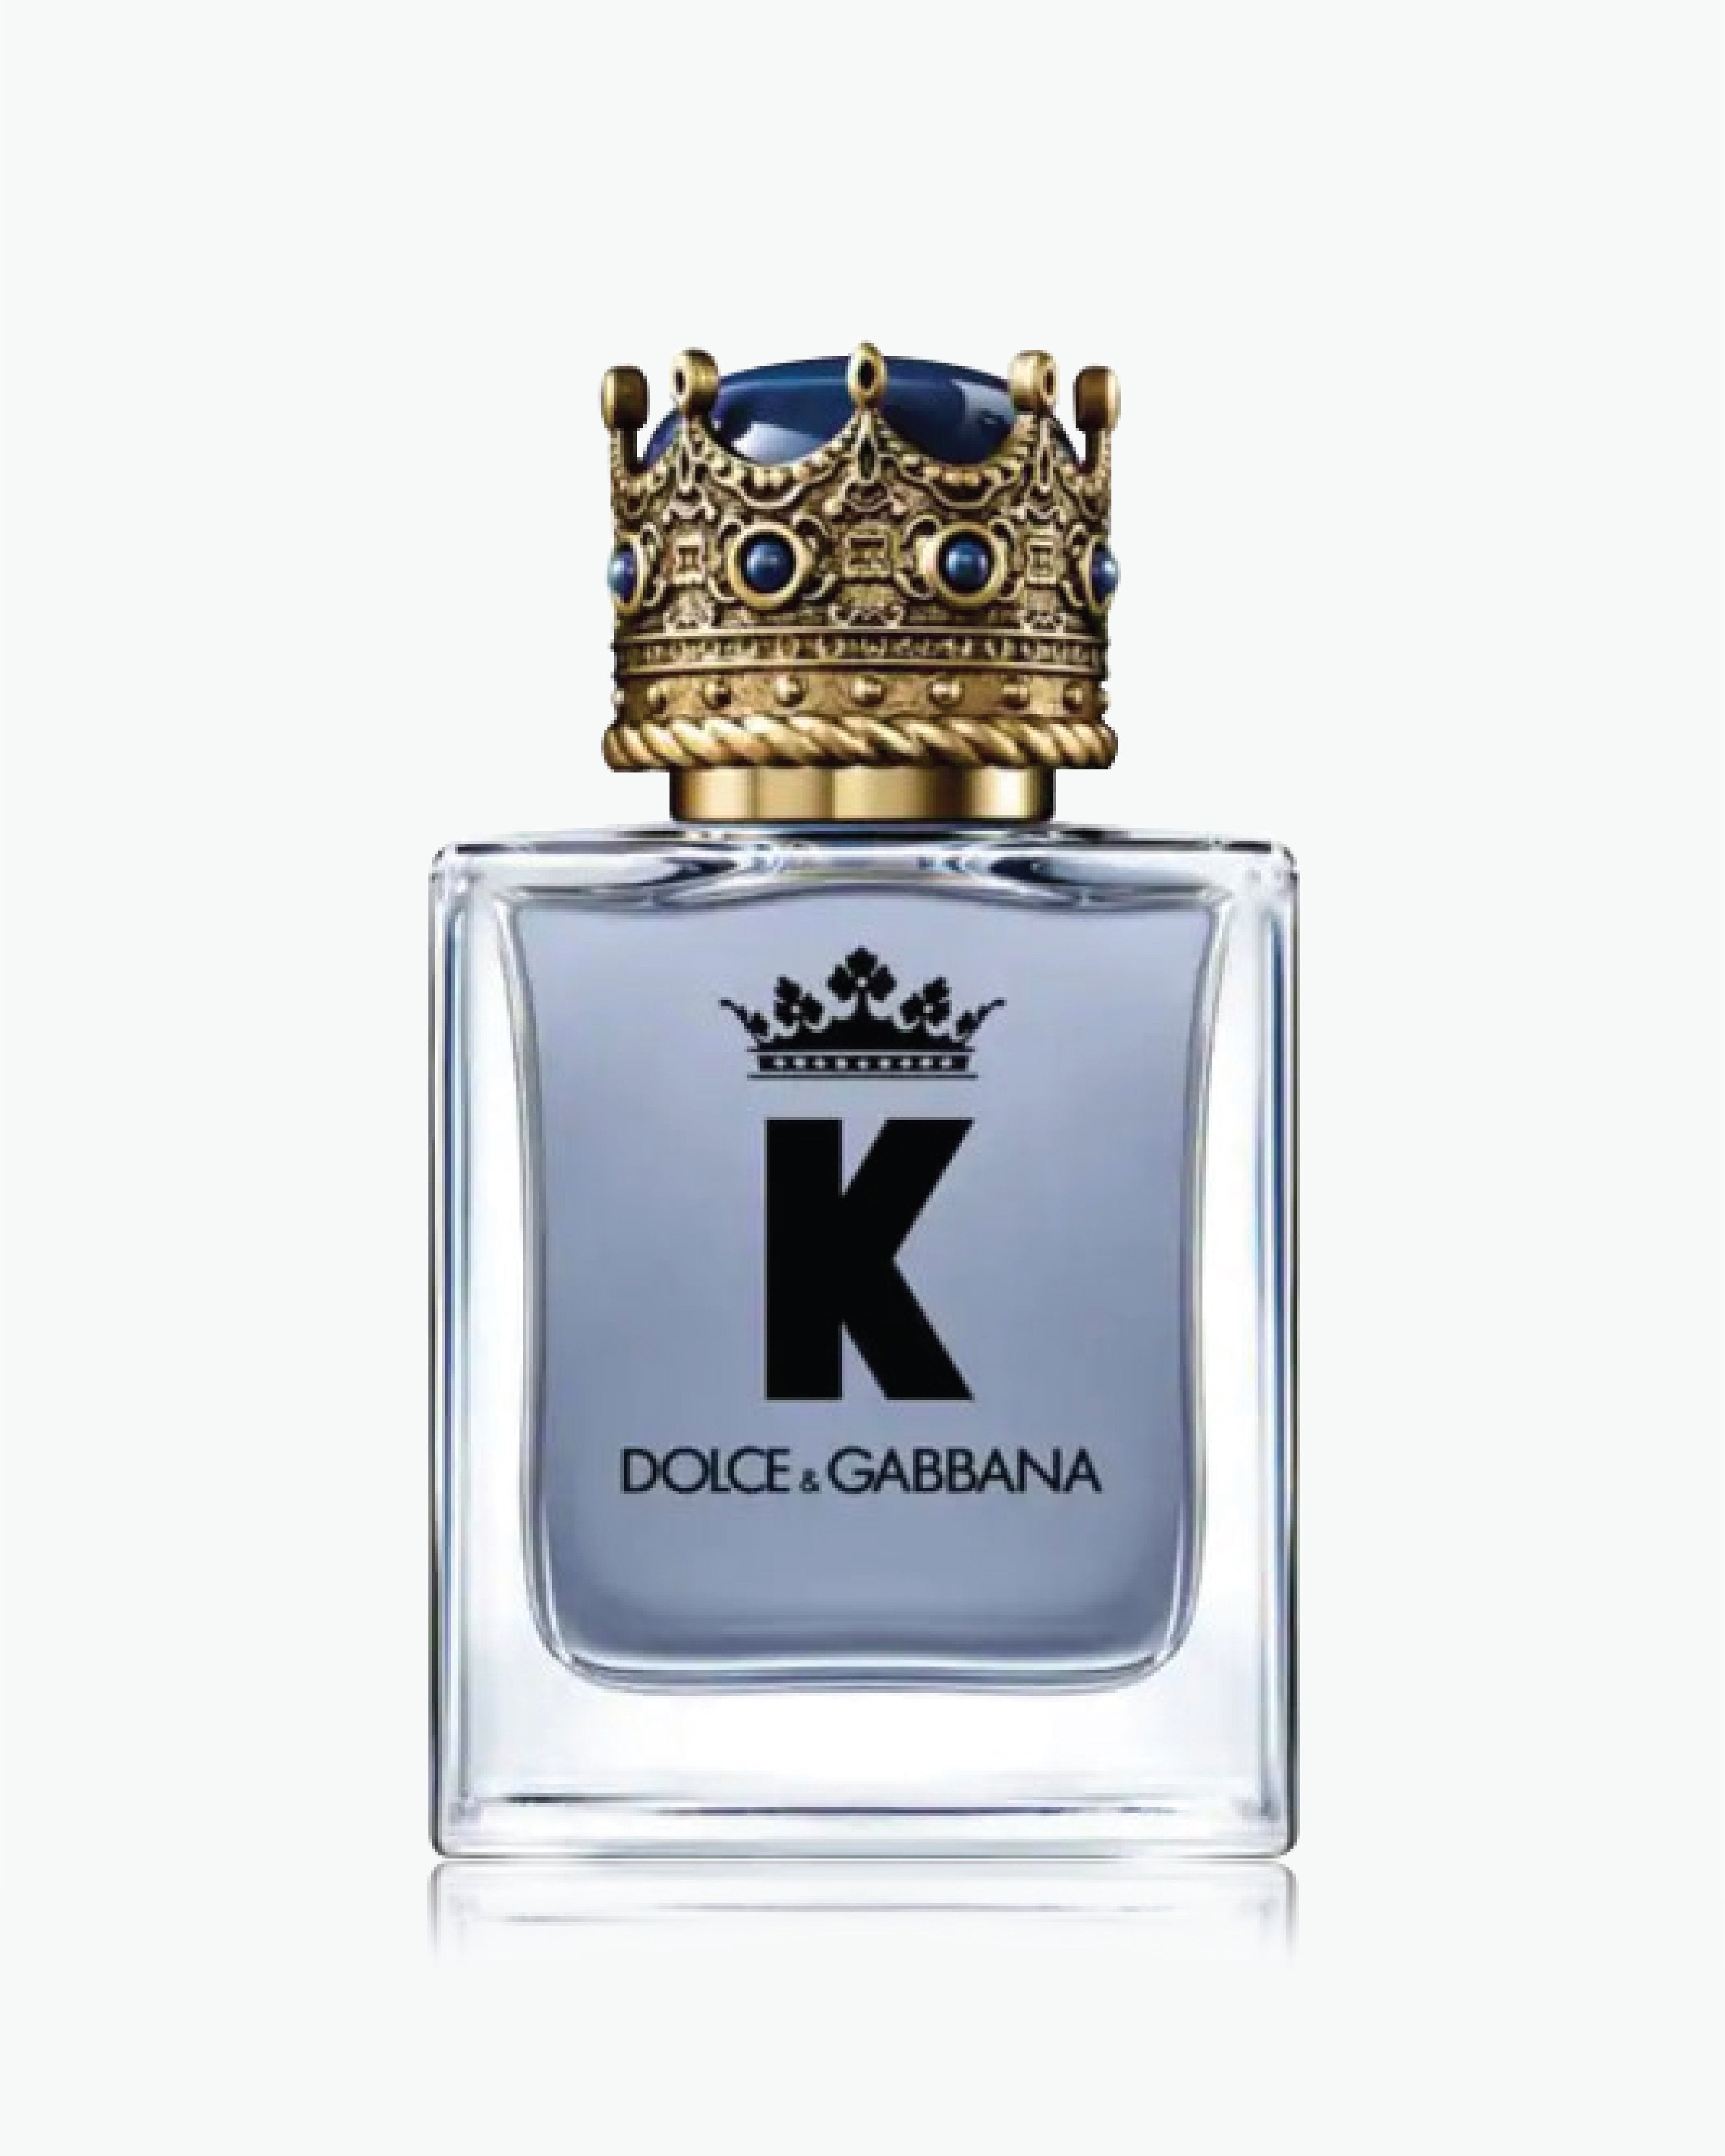 Дольче кинг мужские. Dolce Gabbana King туалетная вода. Dolce Gabbana King 100ml. Dolce Gabbana k King 100ml EDT. Dolce Gabbana духи мужские King.